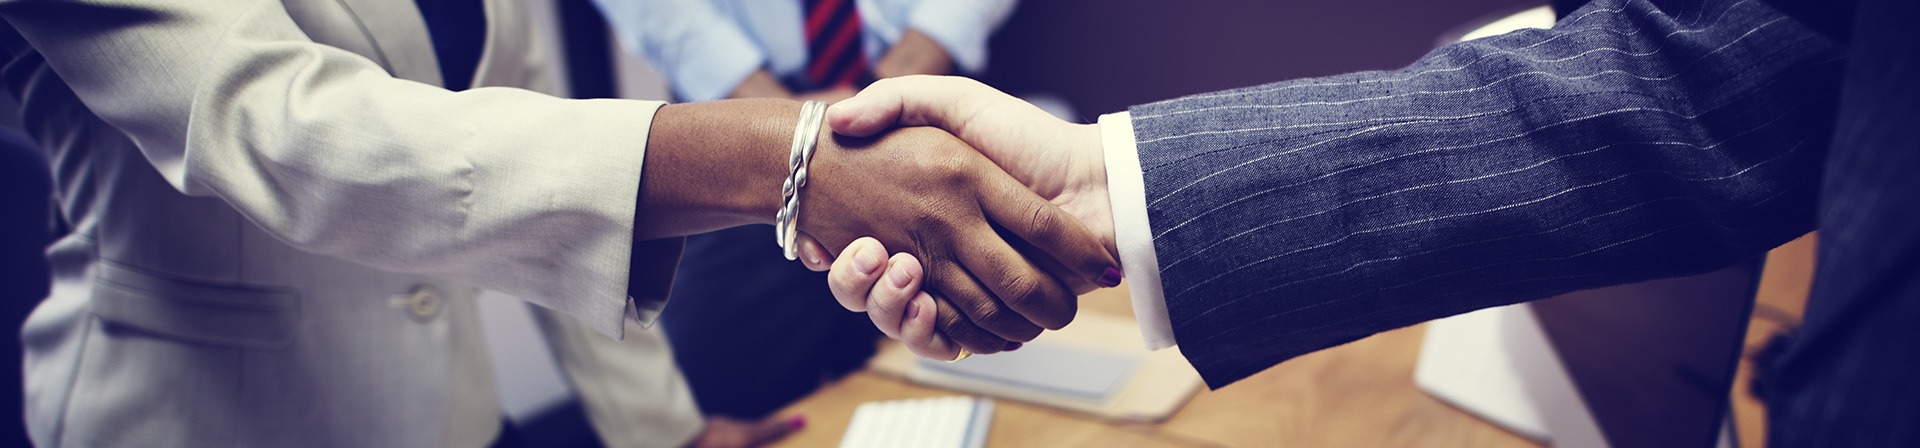 Business handshake across table | Attema Sales